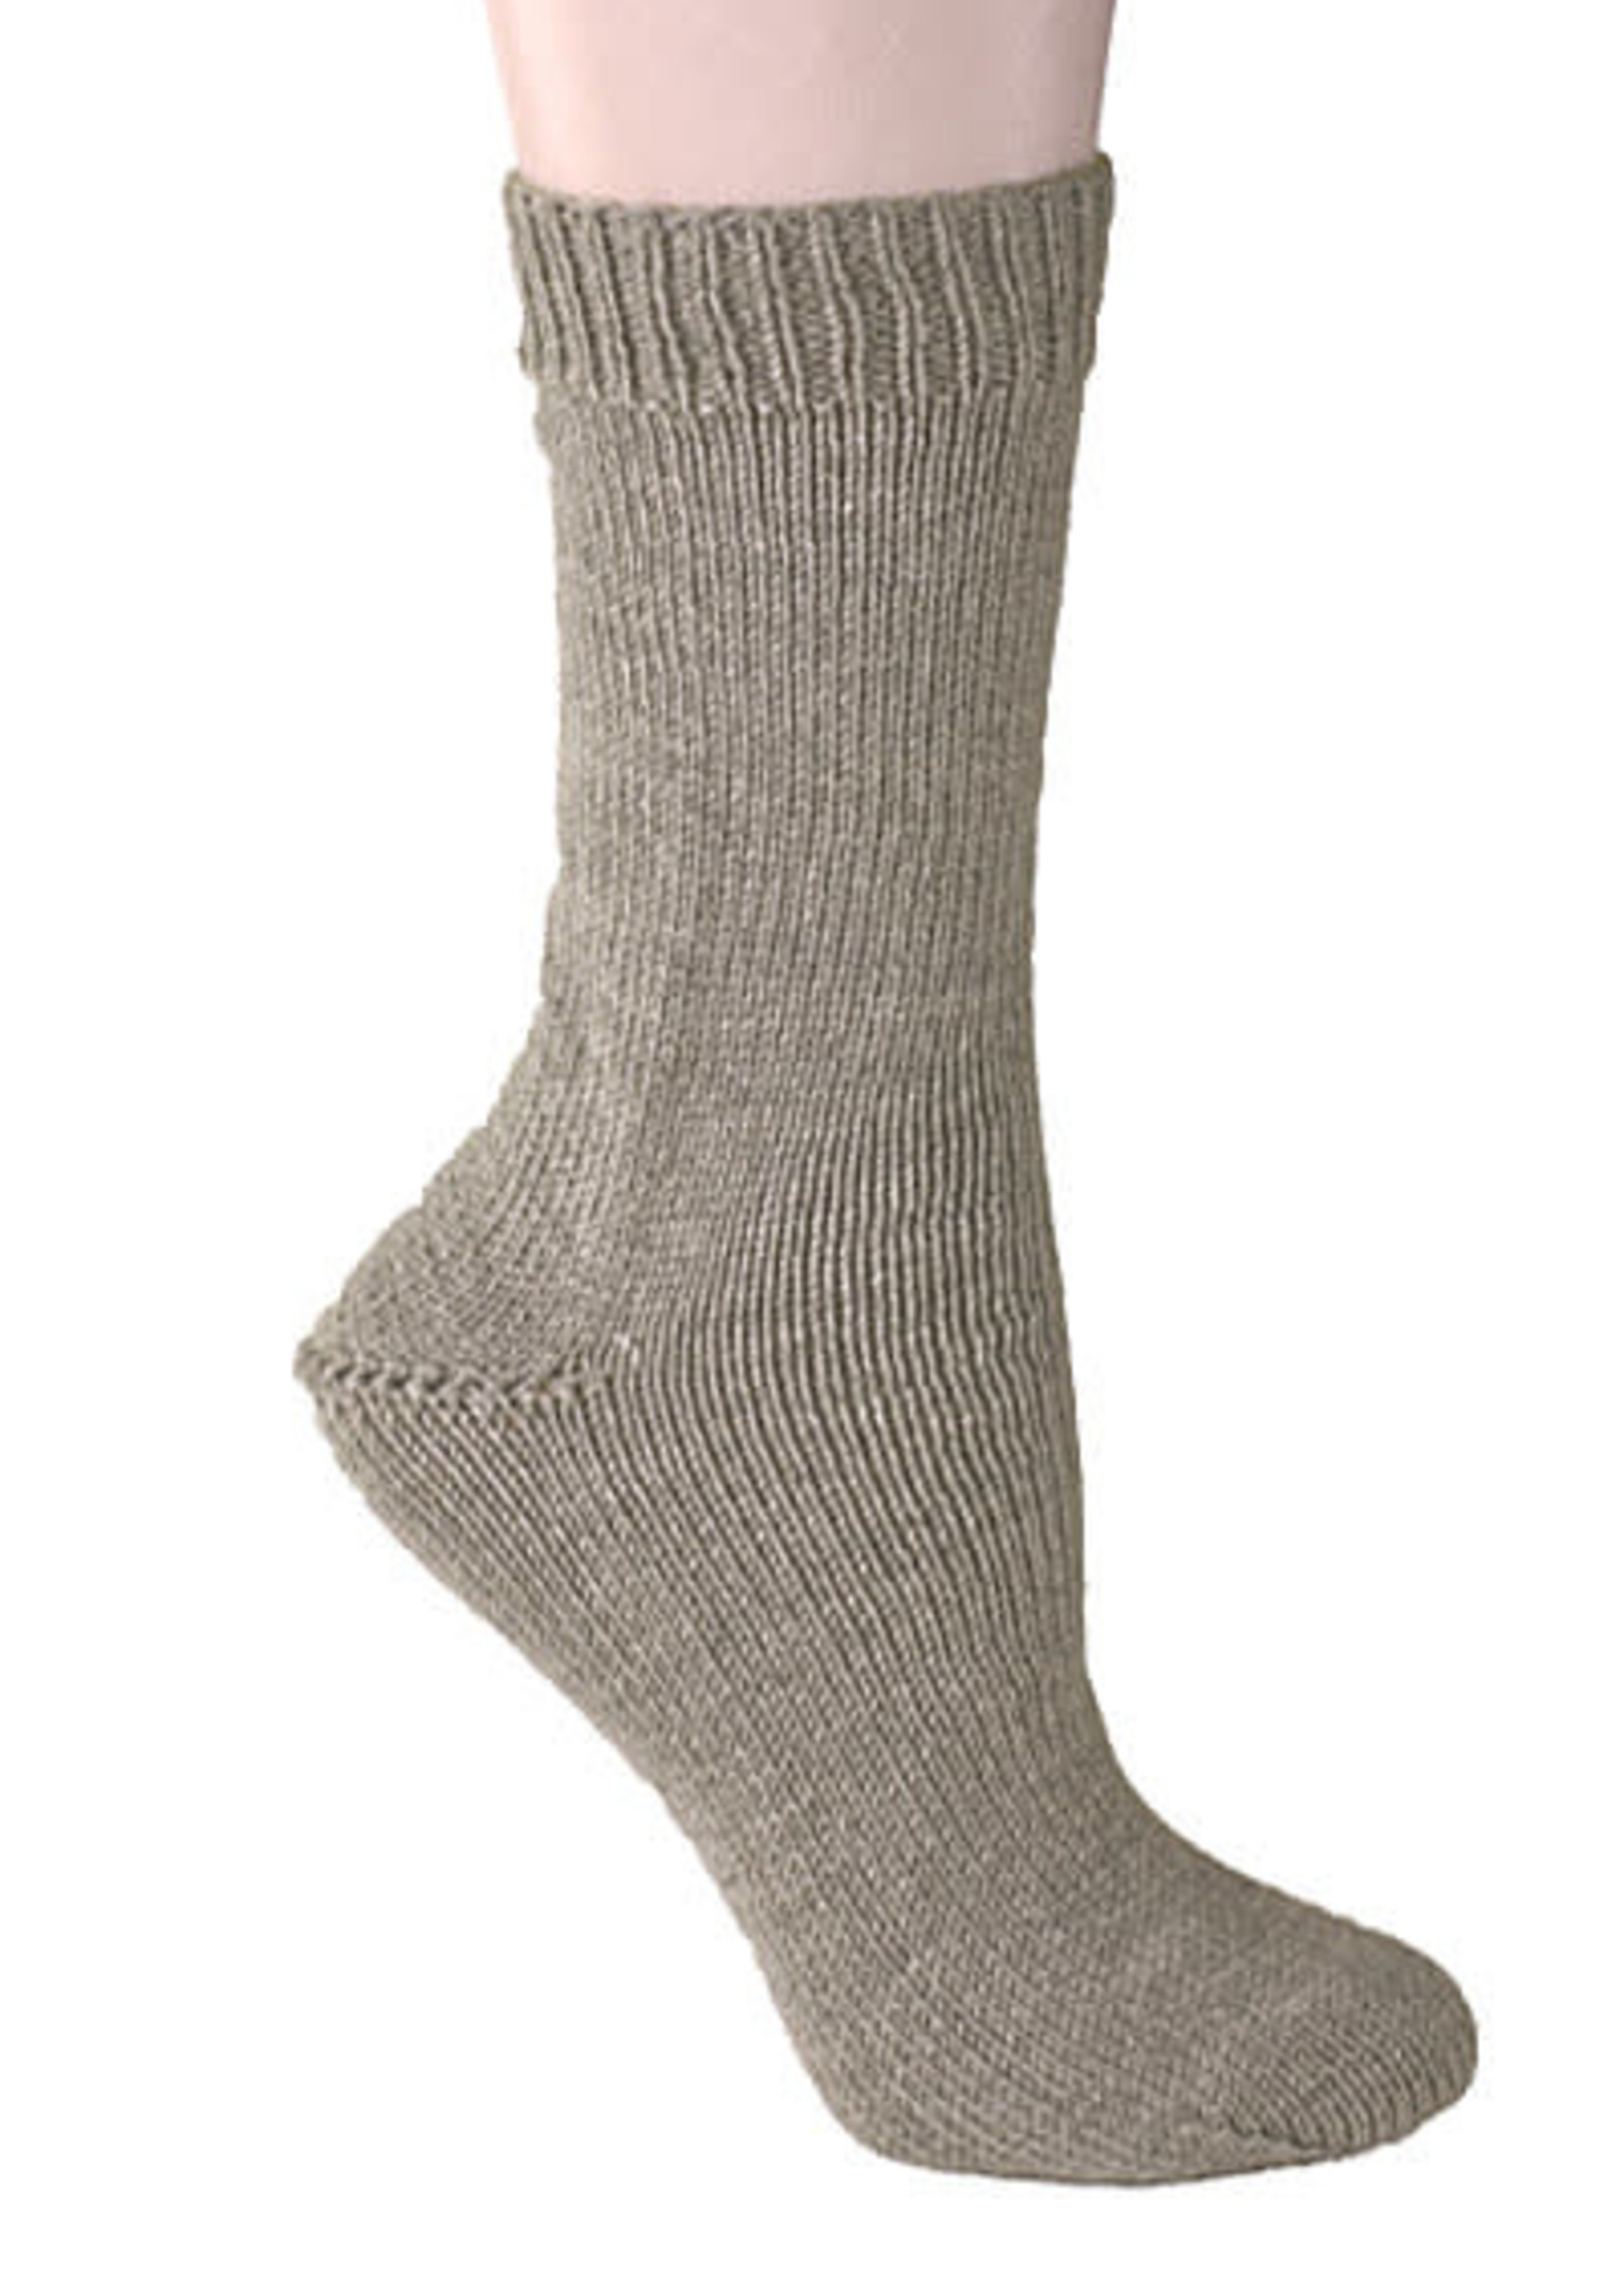 Berroco Berroco Comfort Sock Yarn #1771 Driftwood